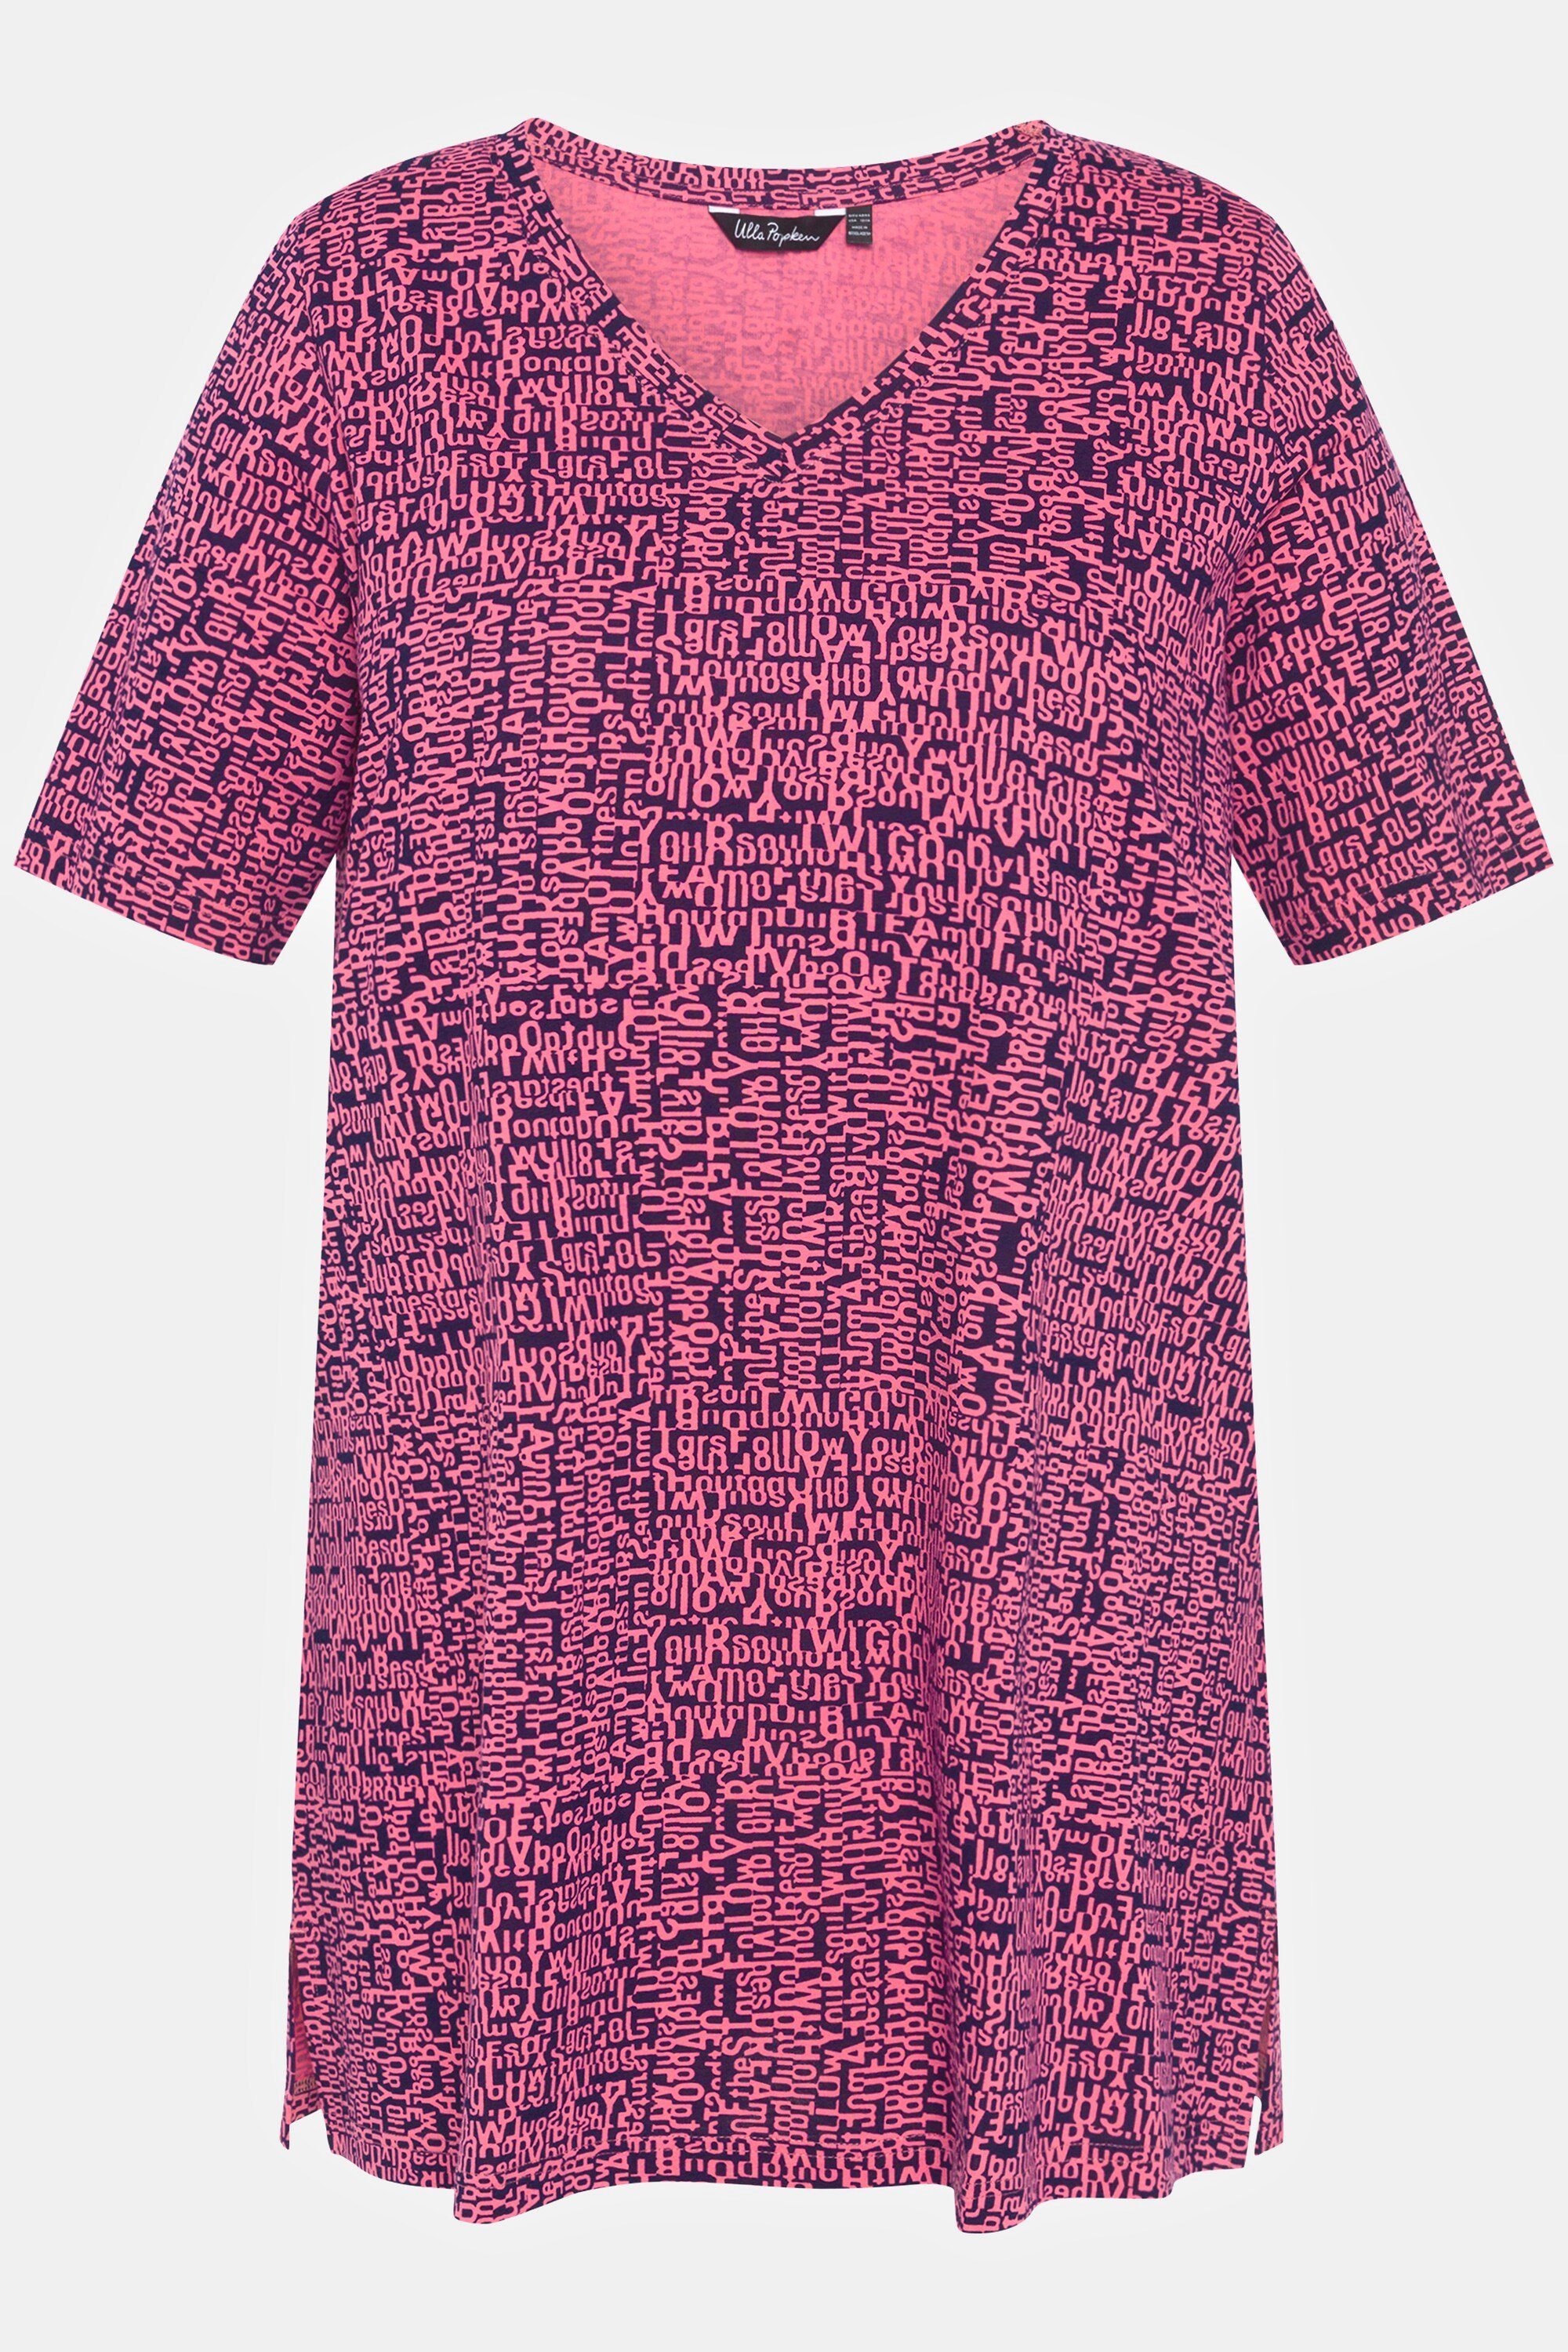 A-Linie Ulla gemustert Rundhalsshirt Popken rosa V-Ausschnitt T-Shirt Halbarm